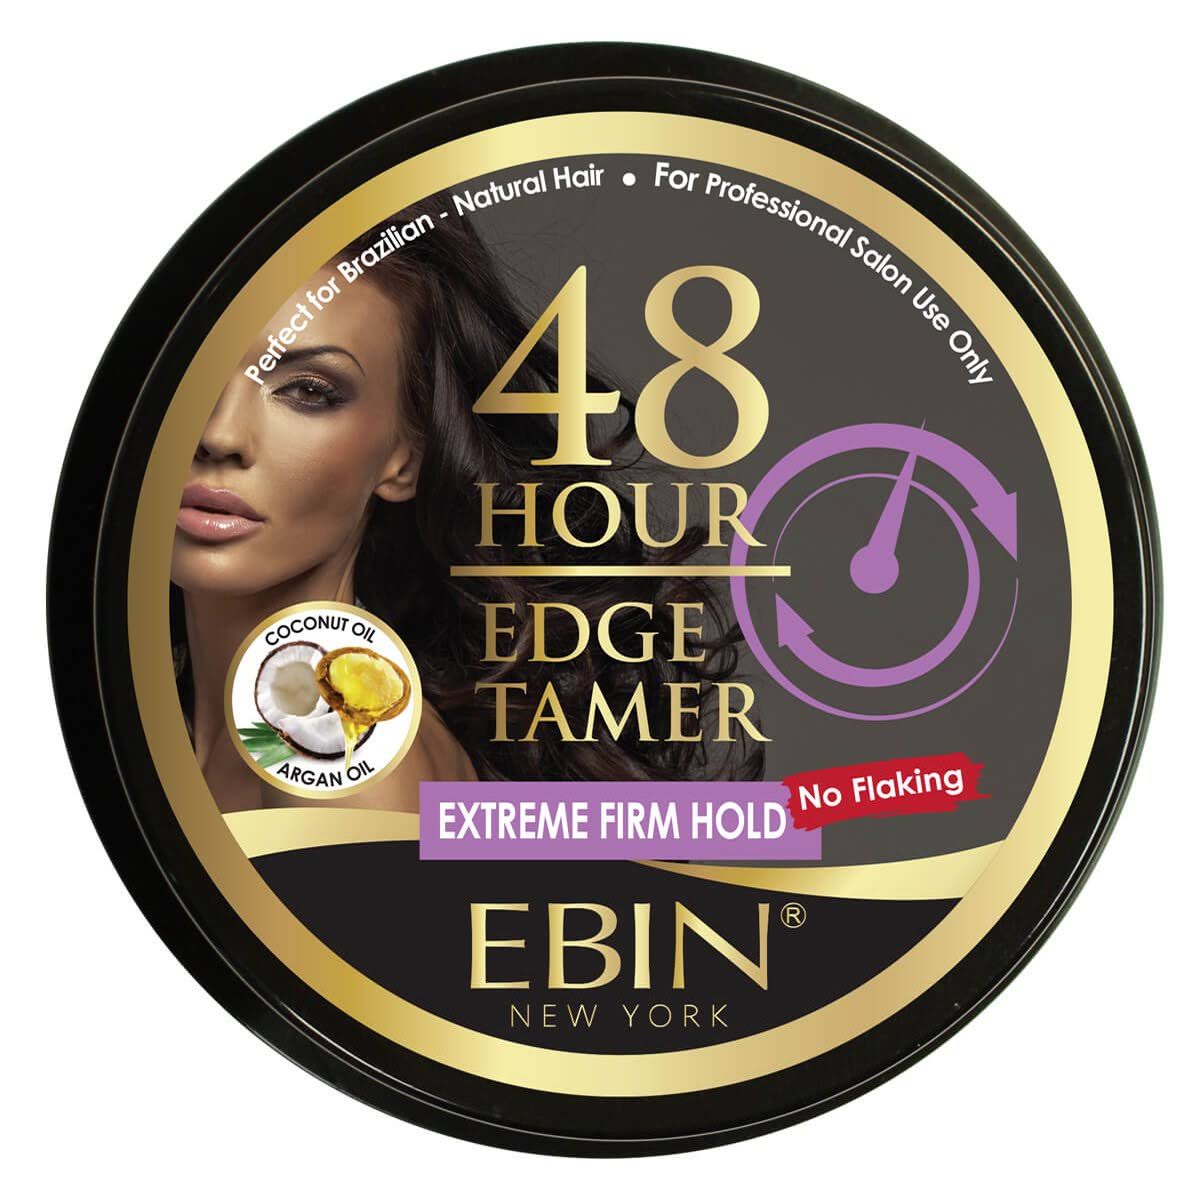 Ebin 48 Hour Edge Tamer Extreme Firm Hold Edge Control Jar - 3.38oz